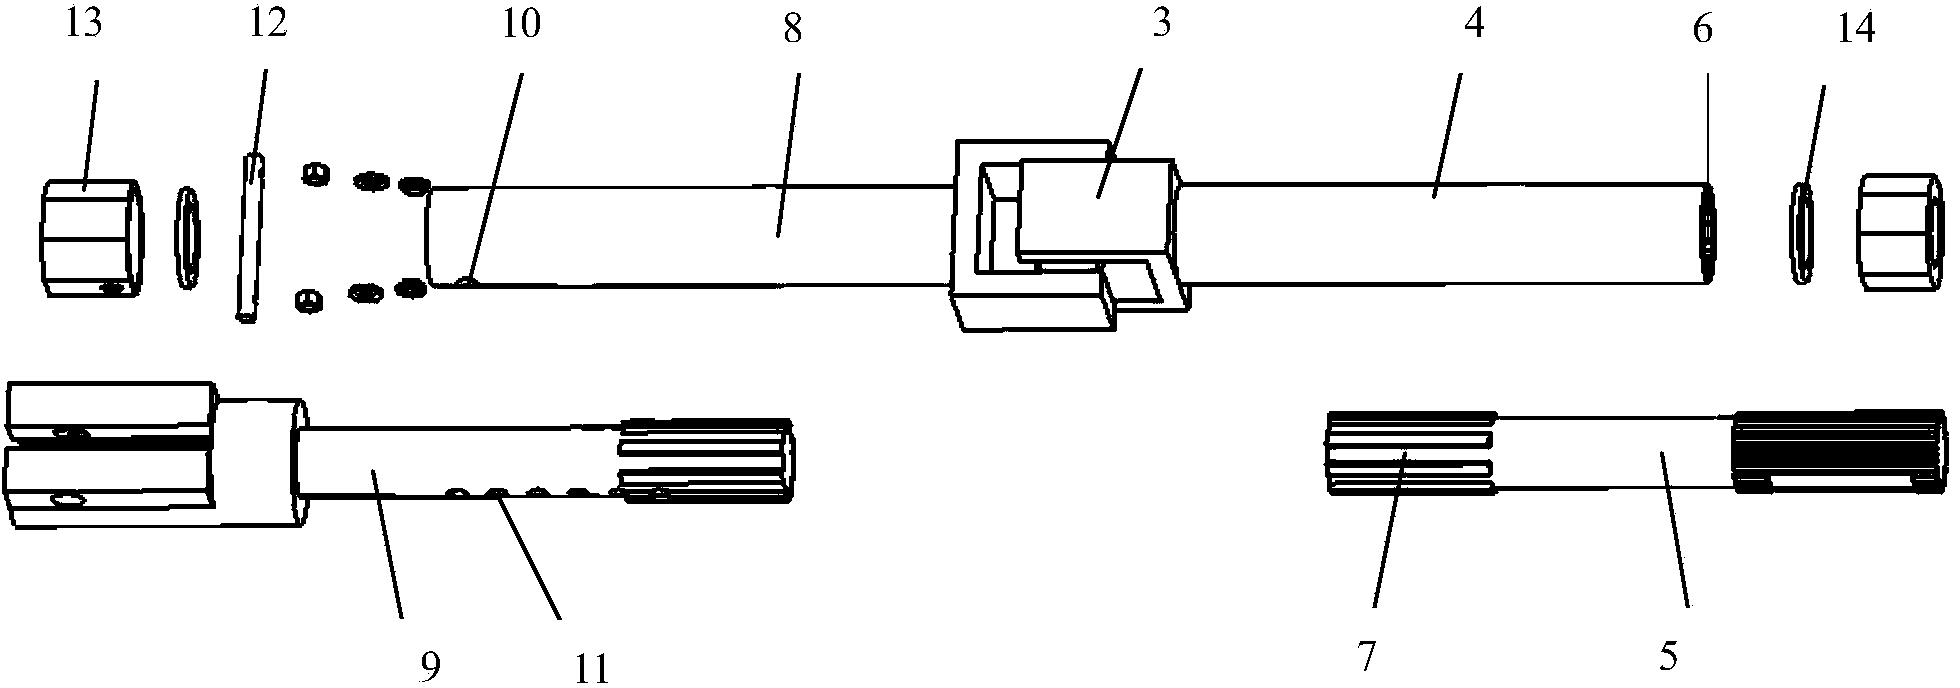 Steering shaft, automobile steering mechanism and automobile